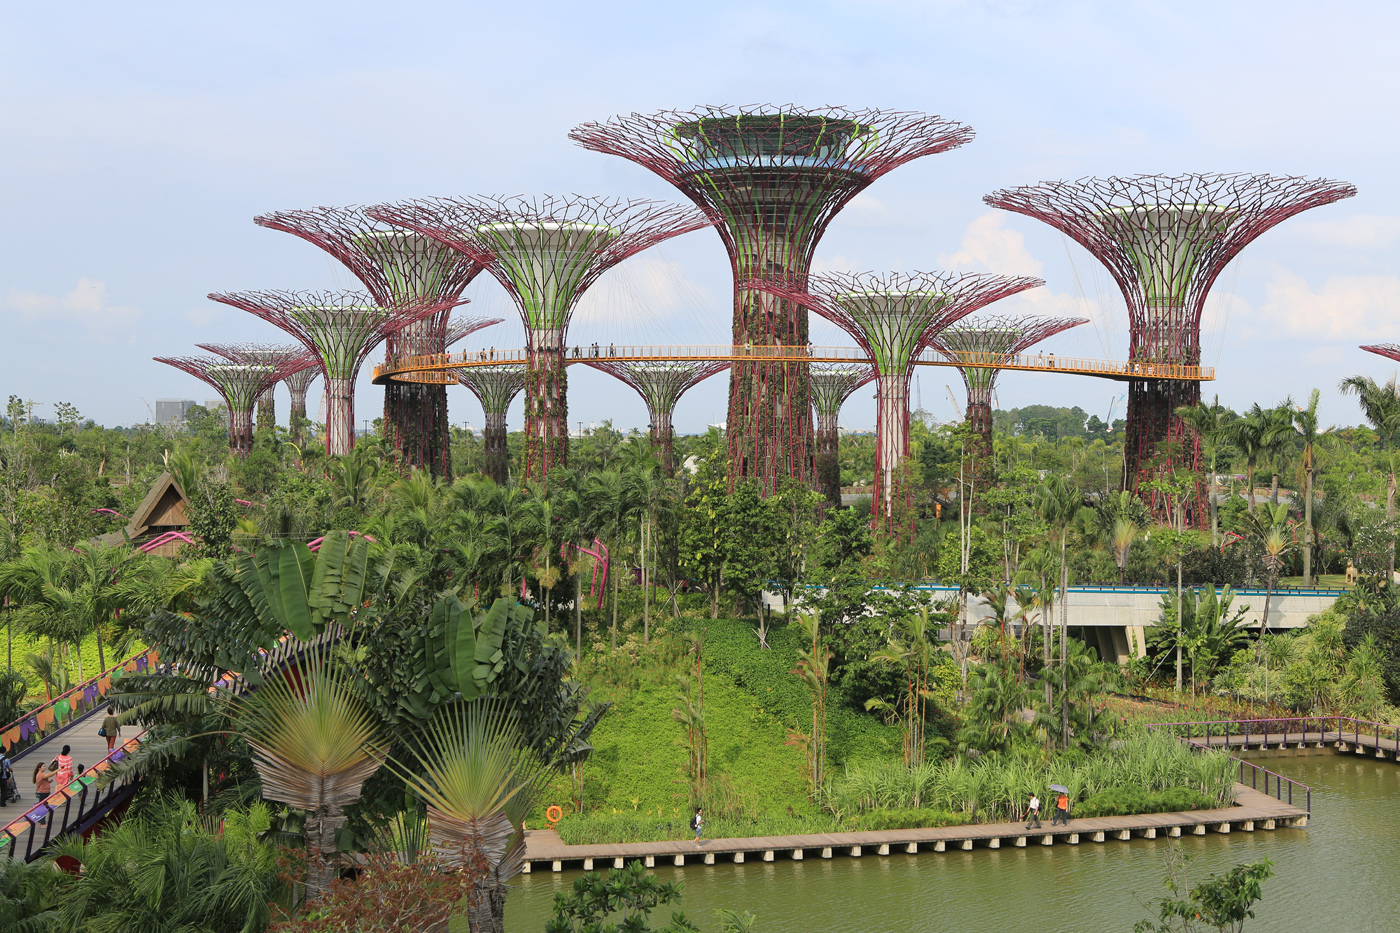 Singapore's artificial natural paradise